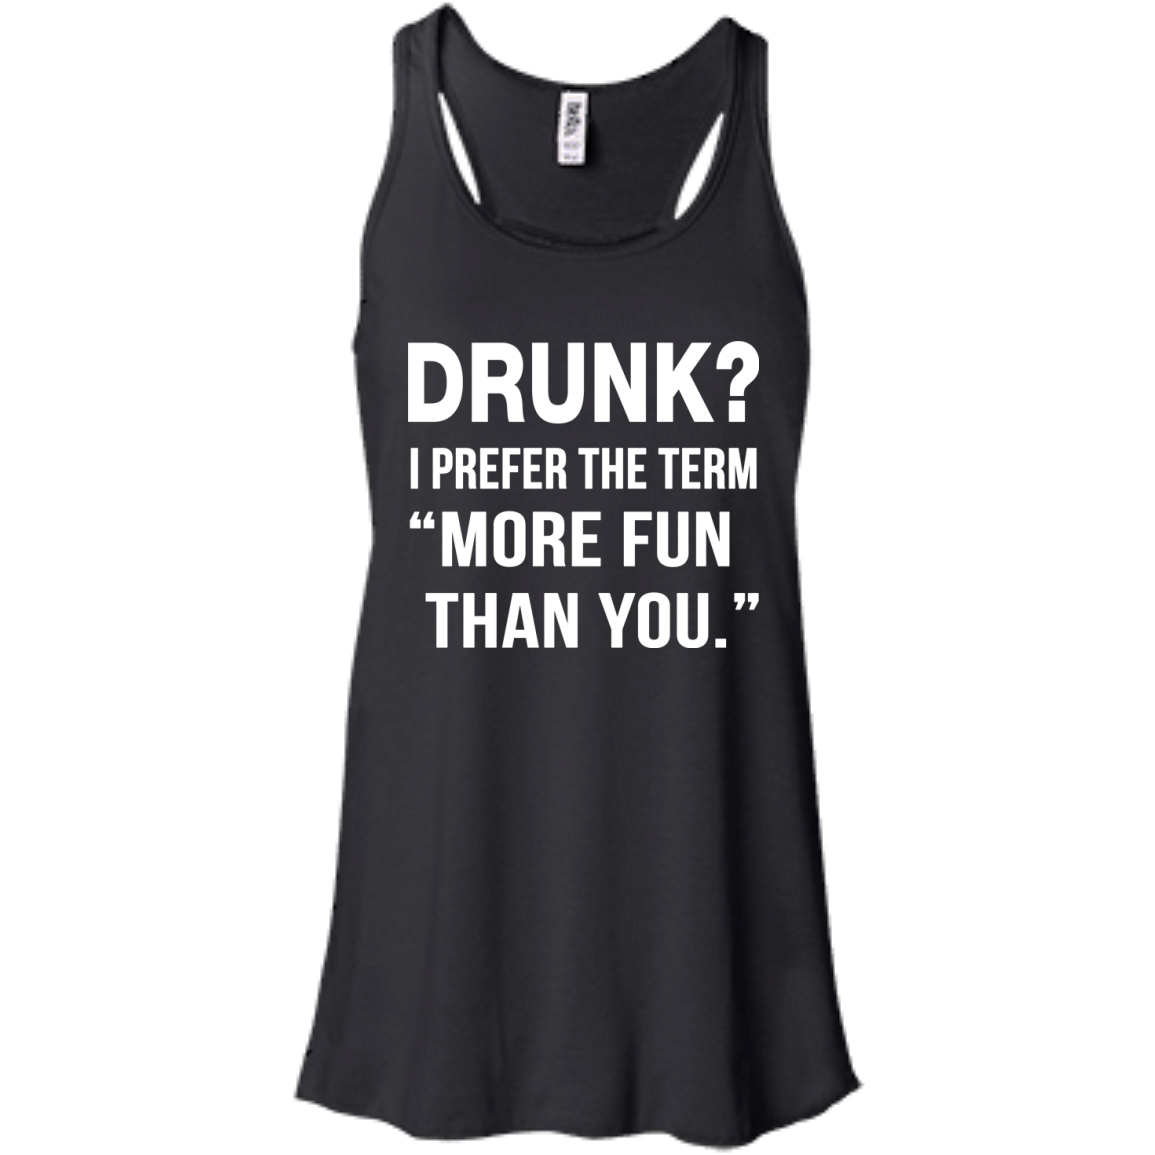 Drunk I prefer the term more fun than you t-shirt, long sleeve